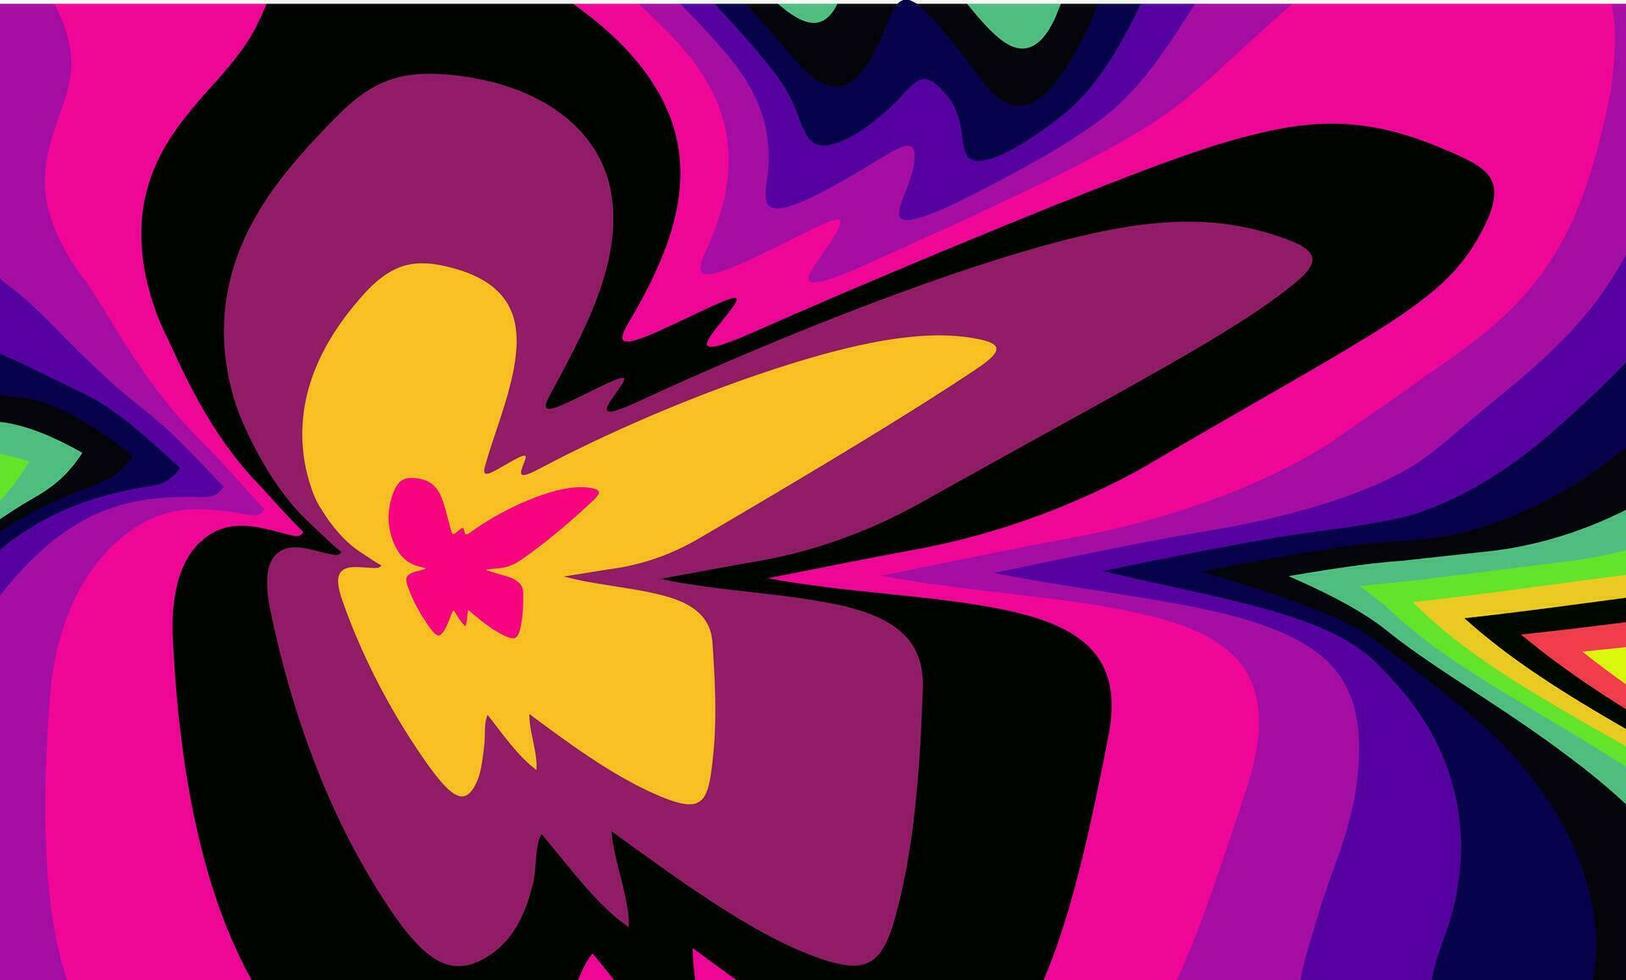 borboleta distorcer groovy hippie psicodélico fundo. vetor ilustração